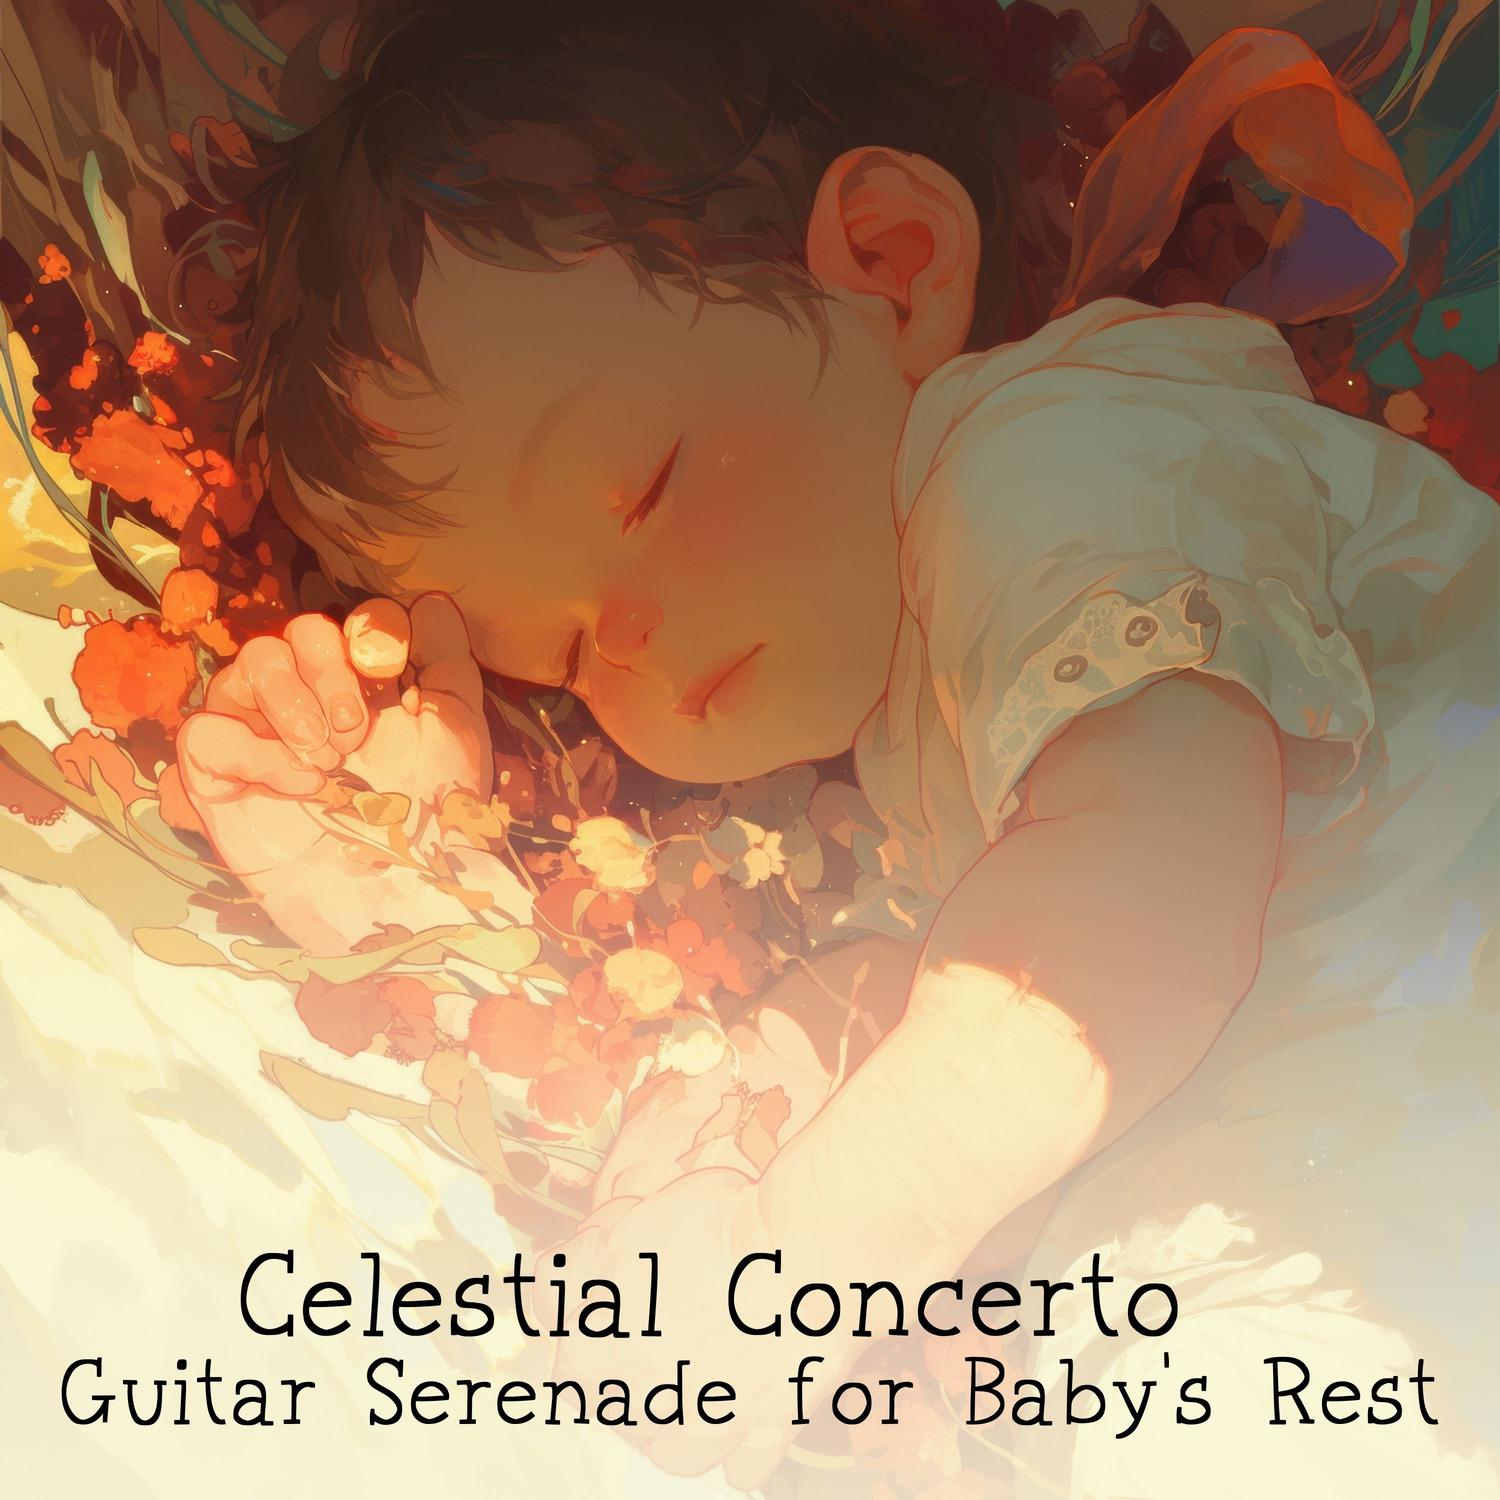 Baby Shushing - Peaceful Guitar Serenades for Infants